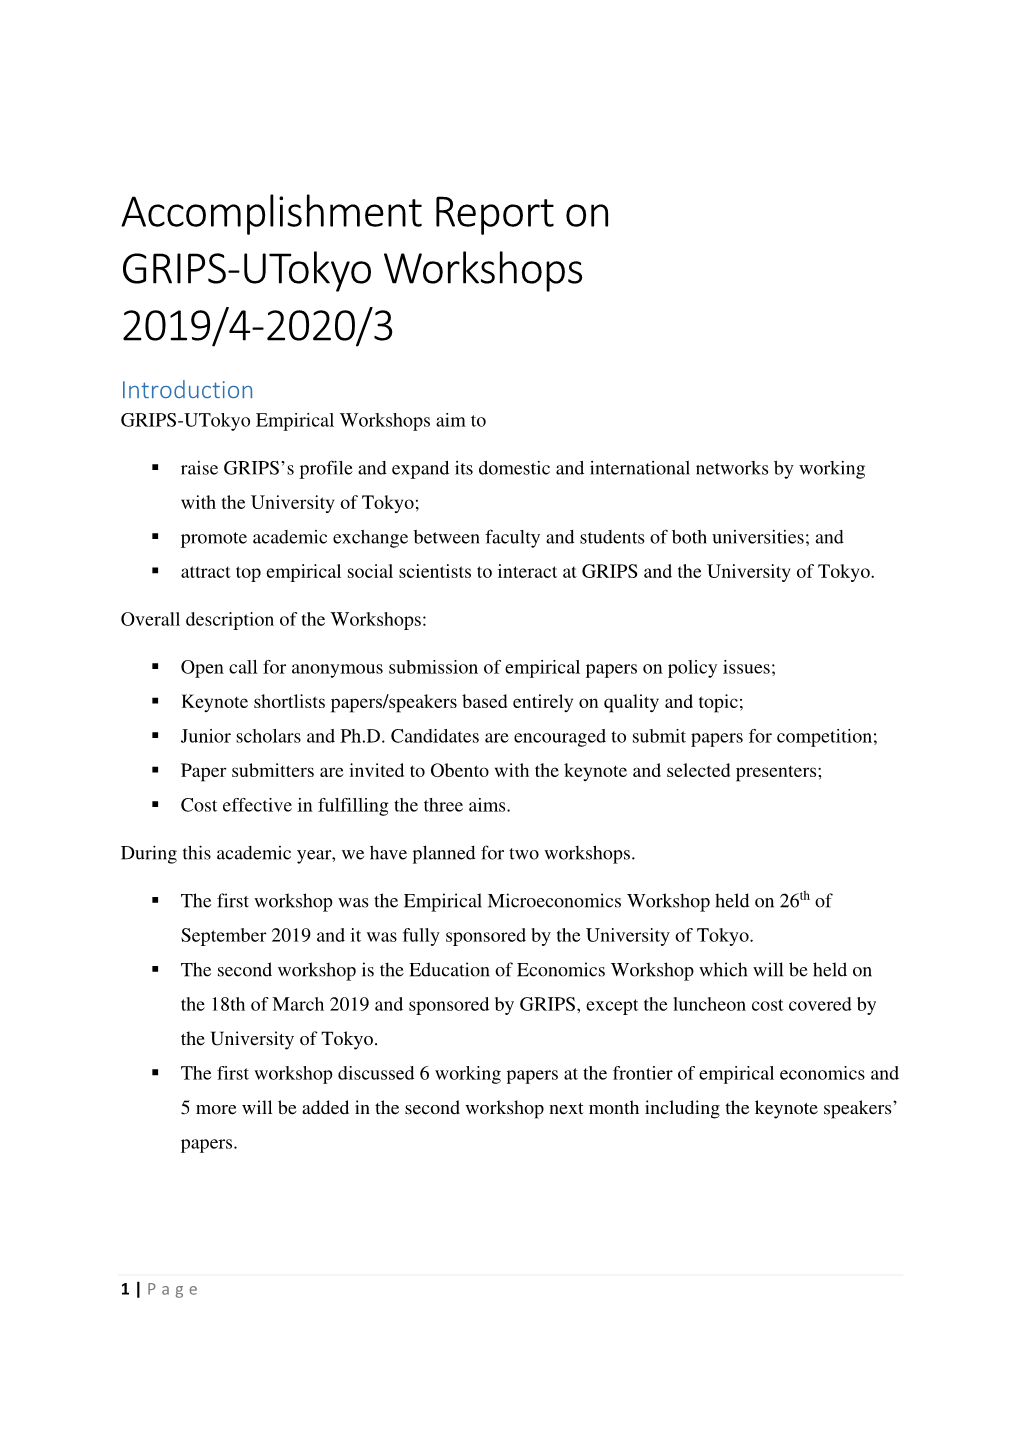 Accomplishment Report on GRIPS-Utokyo Workshops 2019/4-2020/3